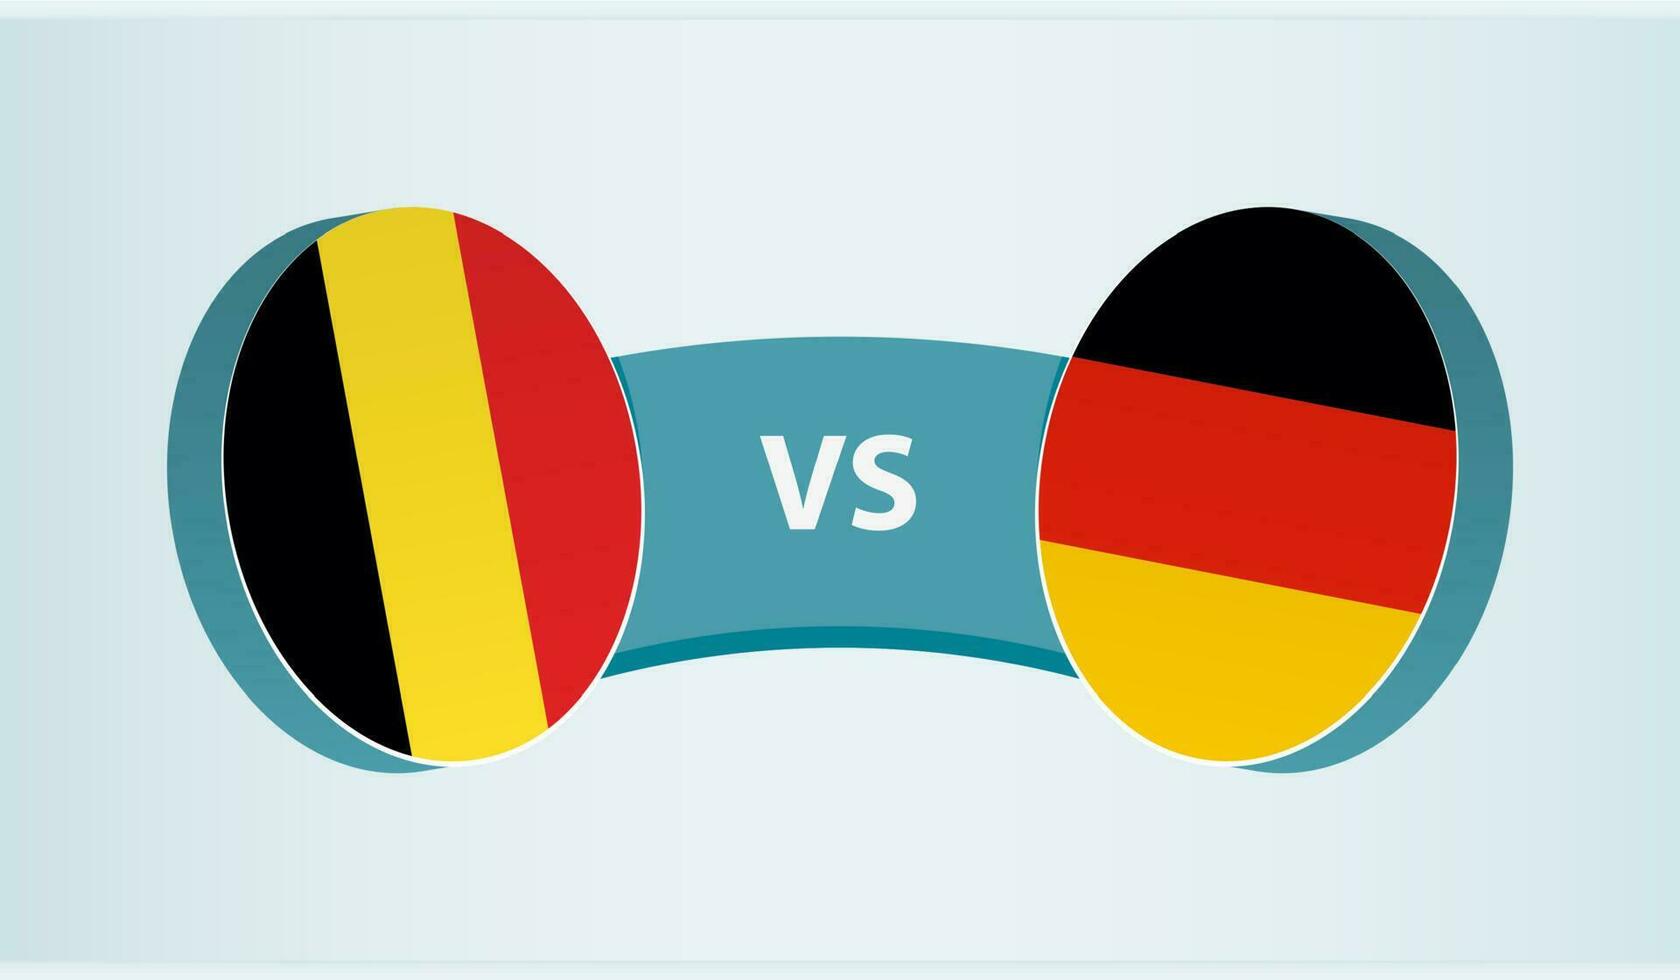 Belgium versus Germany, team sports competition concept. vector